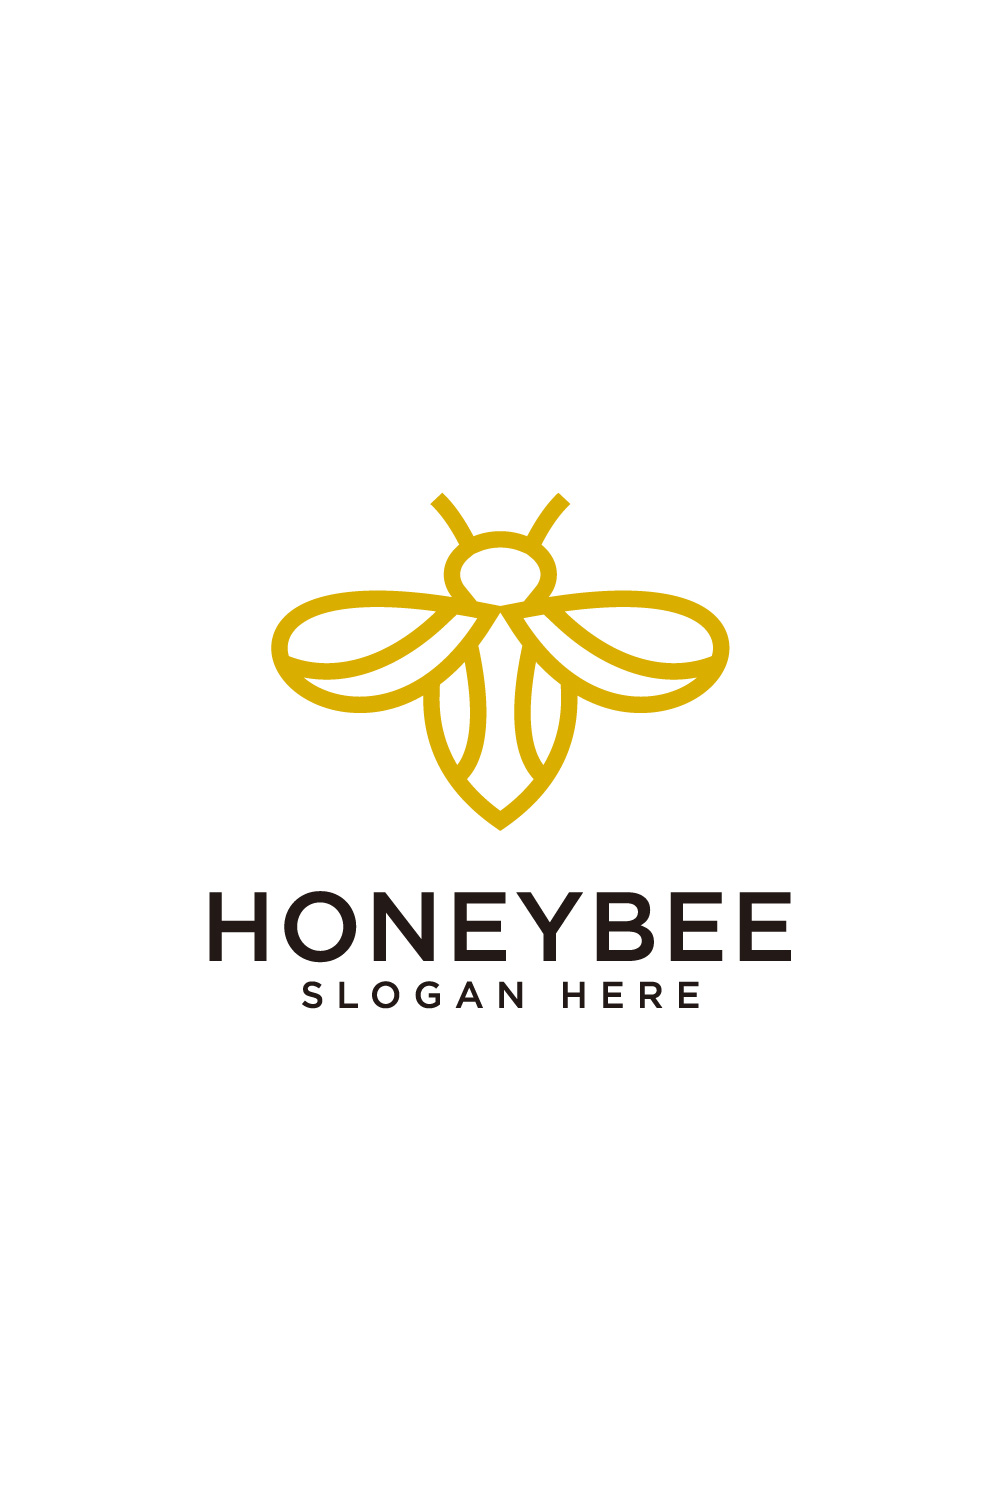 henoy bee logo design vector pinterest preview image.